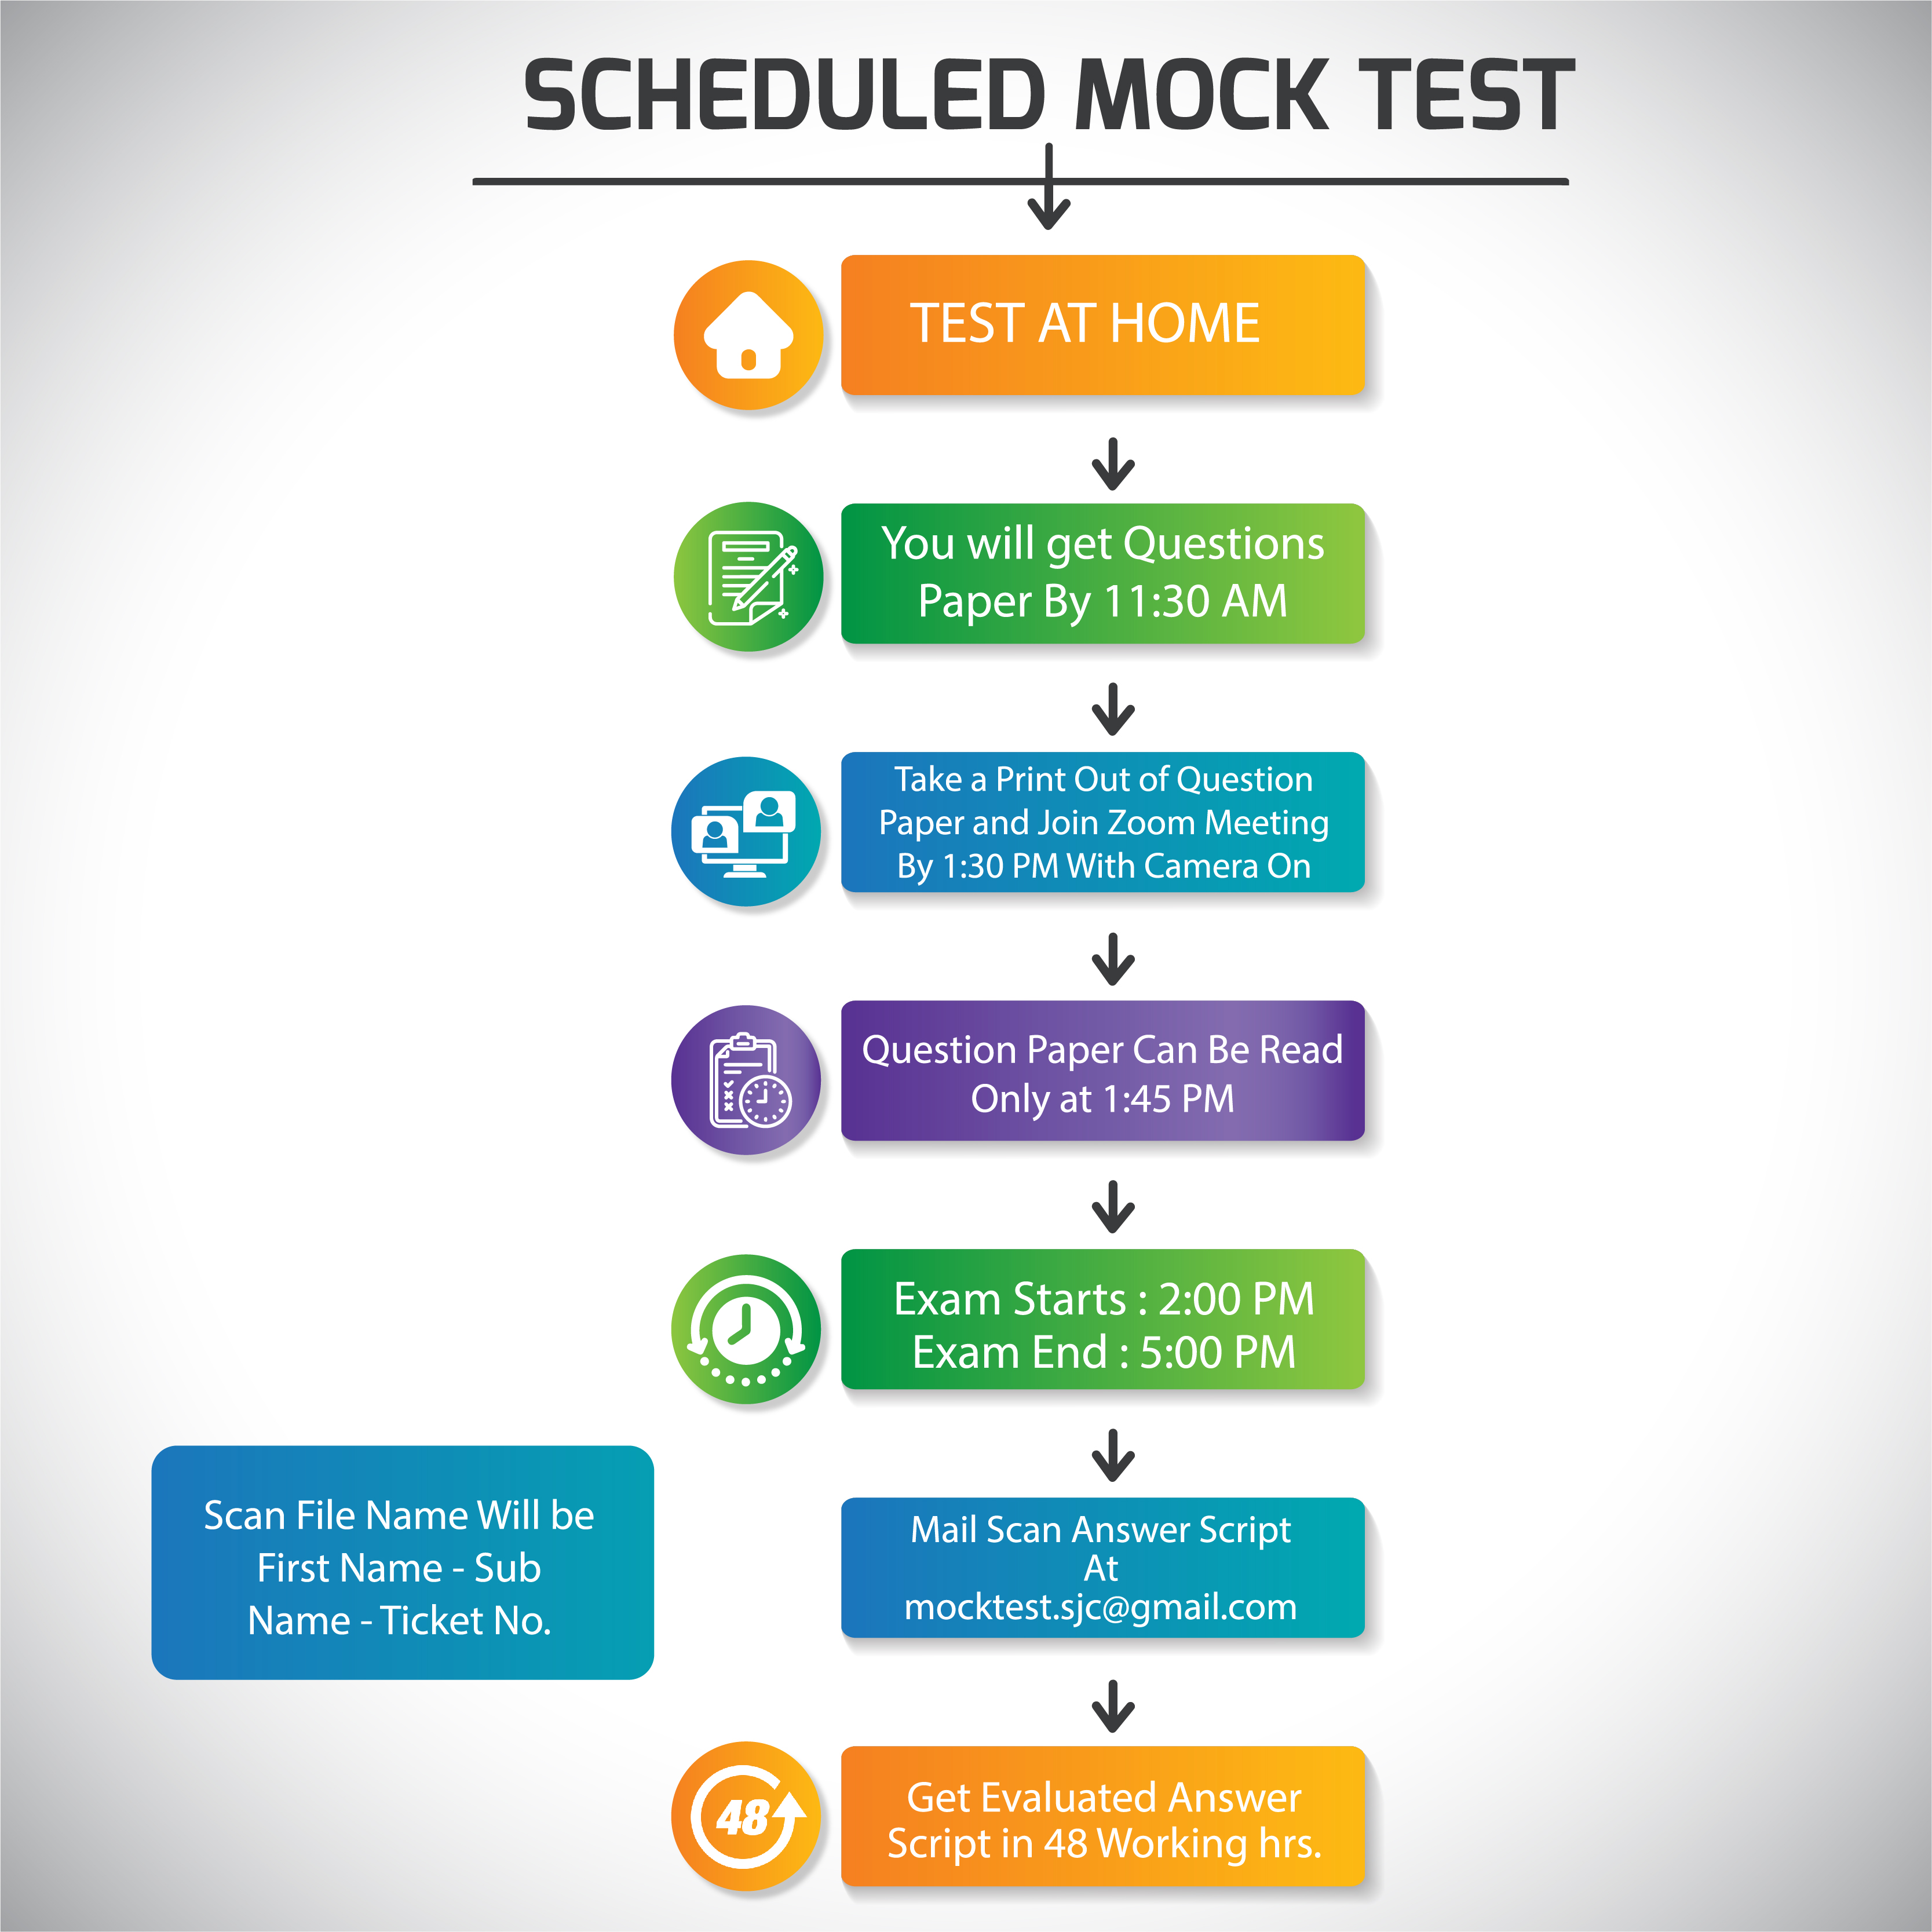 Scheduled Mock Test Revised Poster-01-1